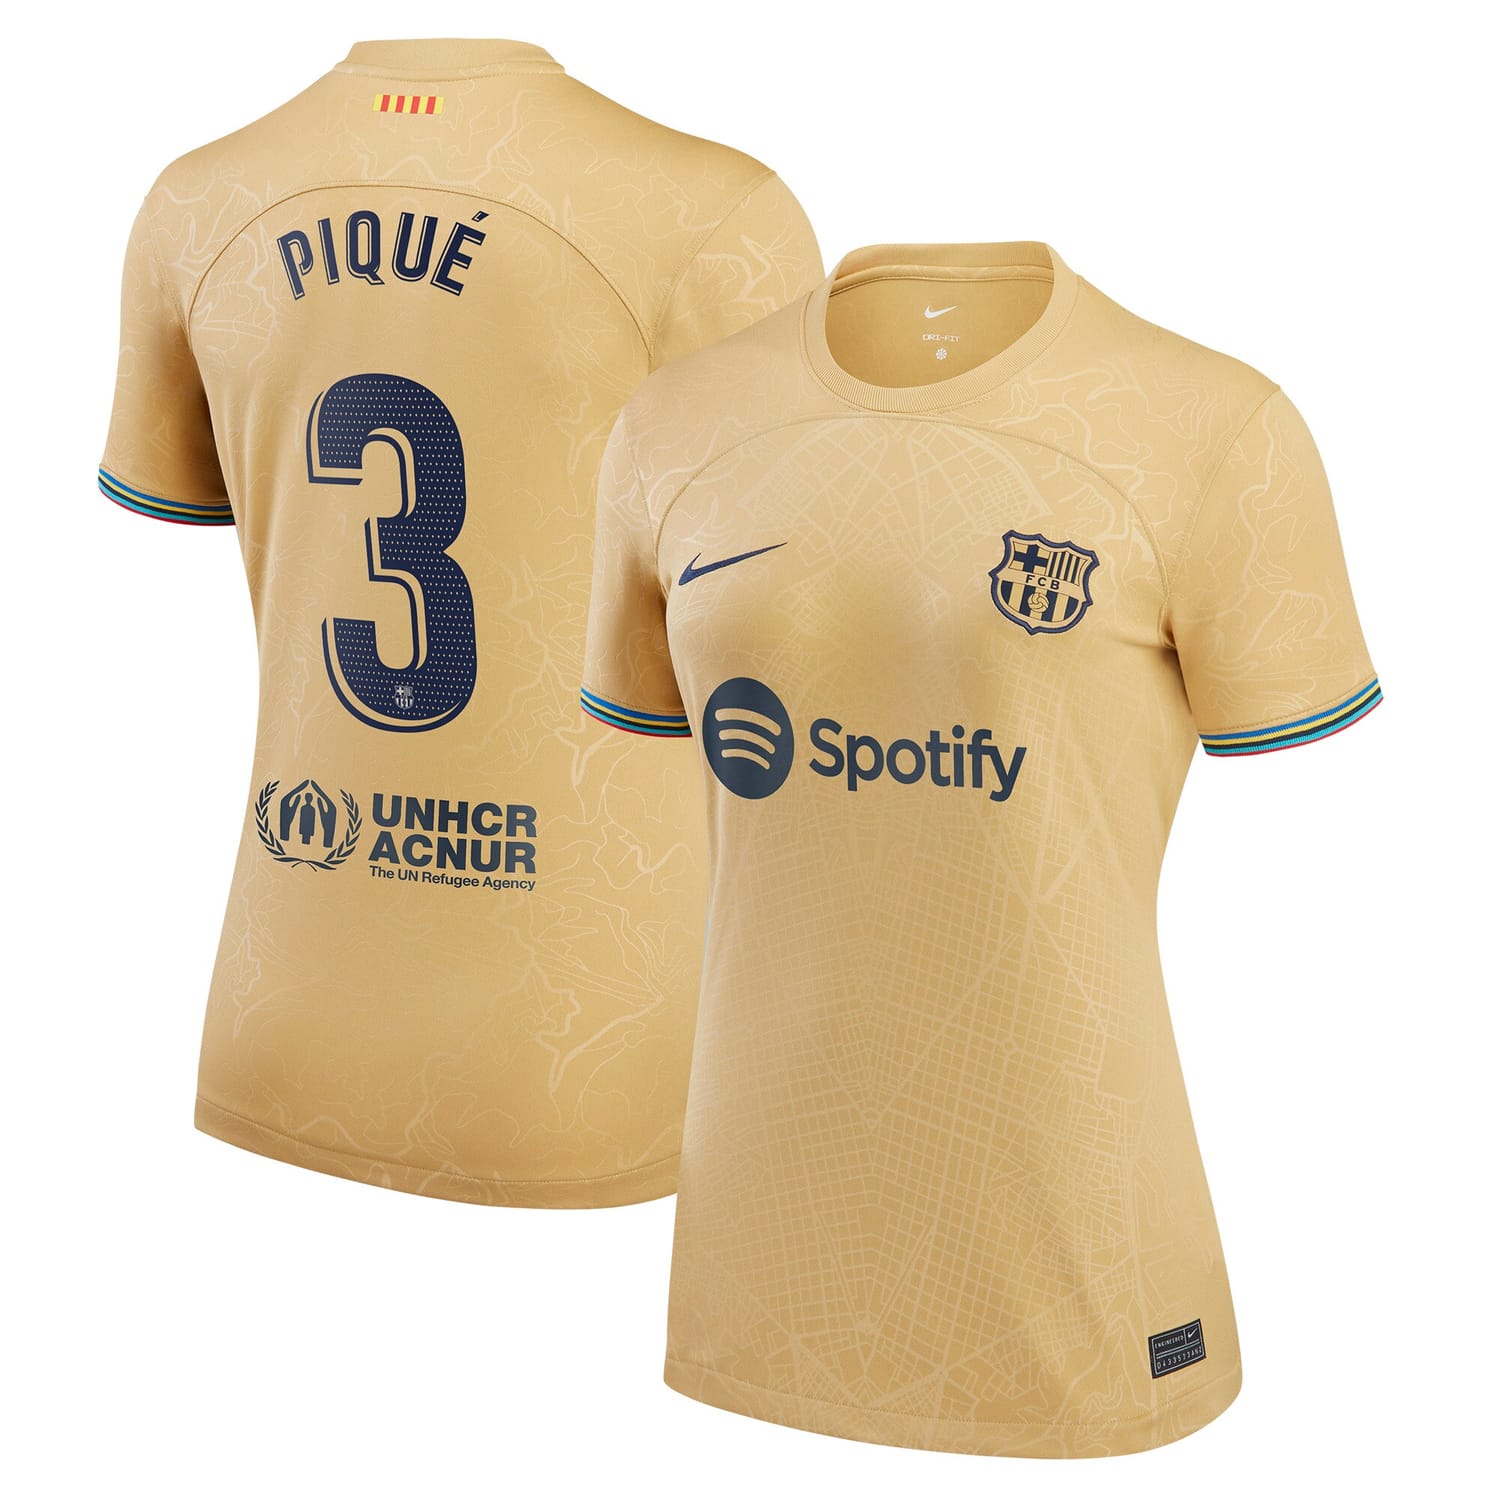 La Liga Barcelona Away Jersey Shirt Gold 2022-23 player Gerard Pique printing for Women